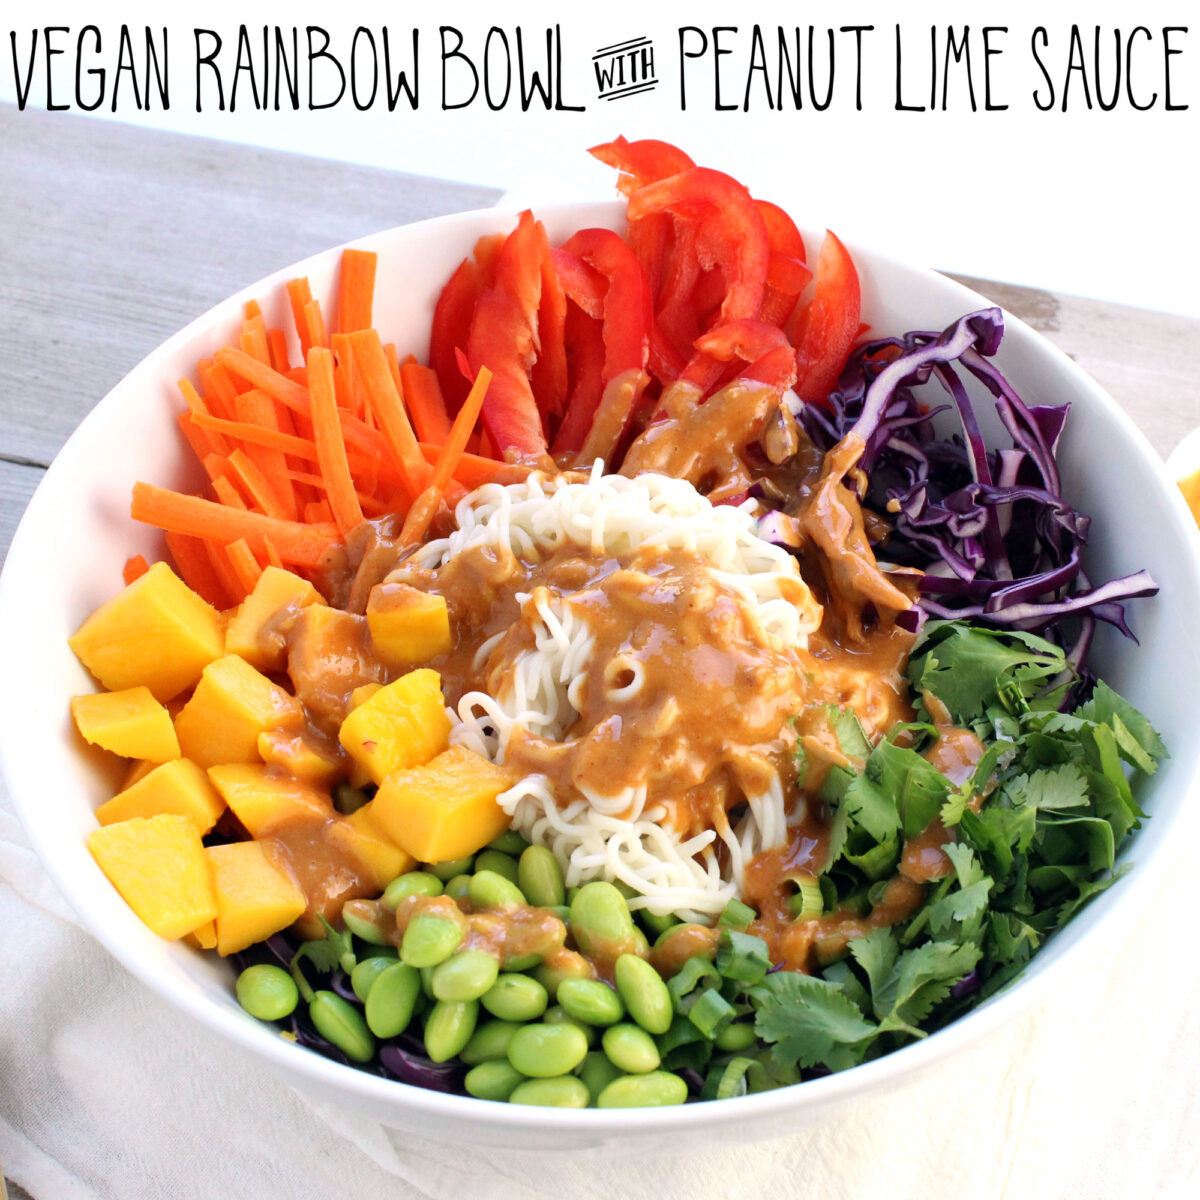 Vegan Rainbow Bowl with Peanut Lime Sauce